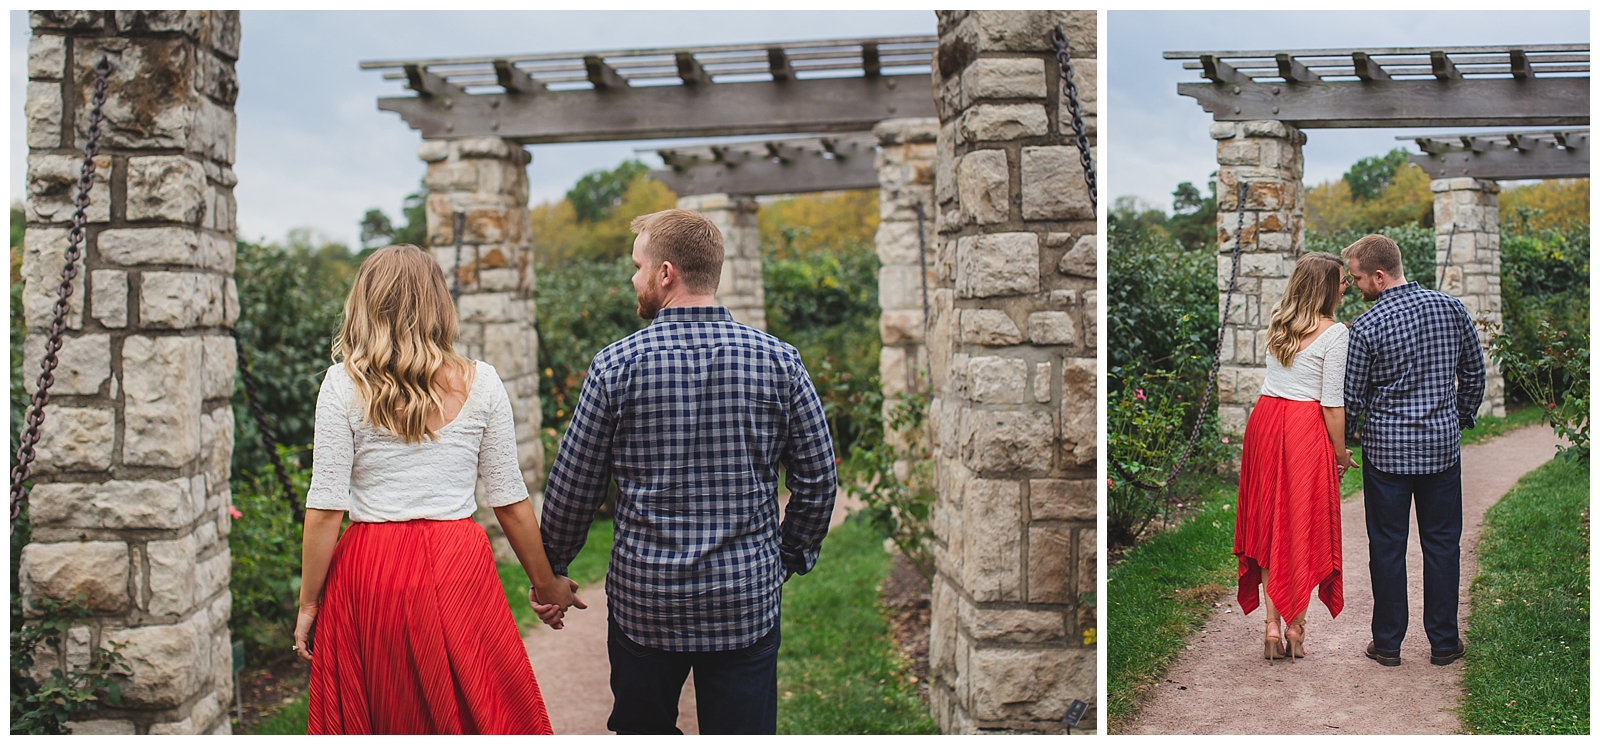 Engagement photography by Kansas City wedding photographers Wisdom-Watson Weddings.